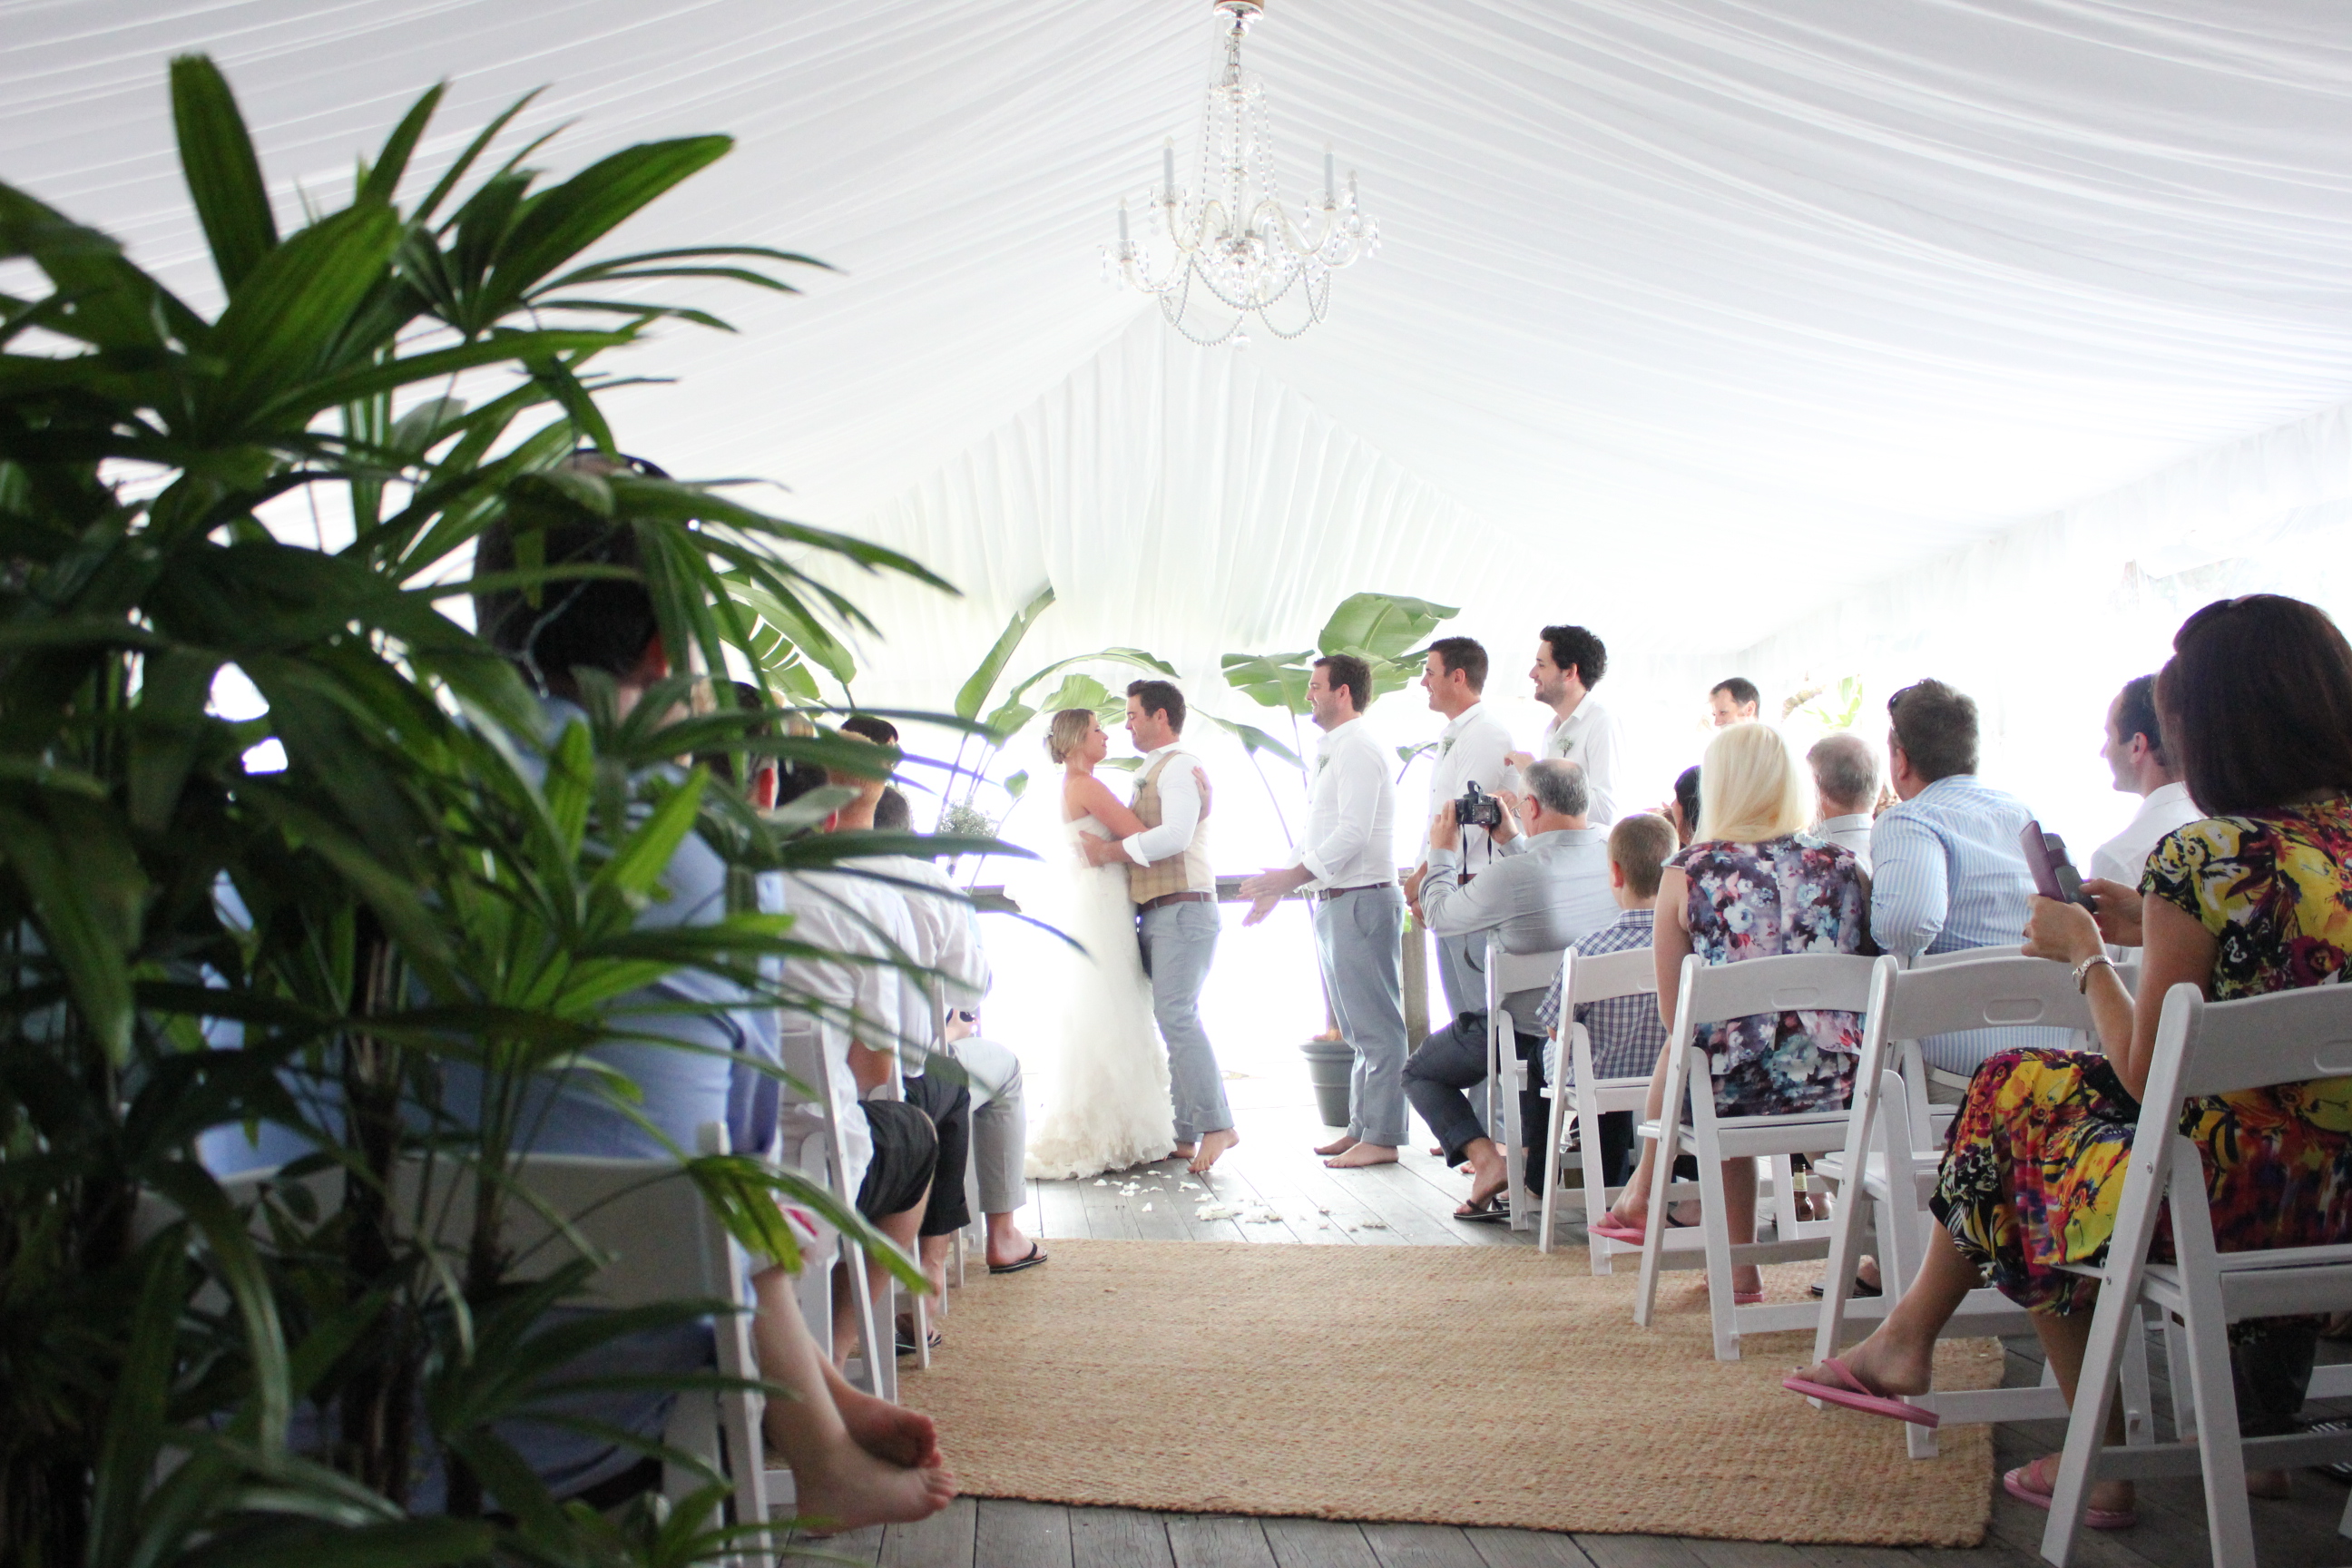 Byron Bay Surf Club Wedding Ceremony With Celebrant Jamie Eastgate